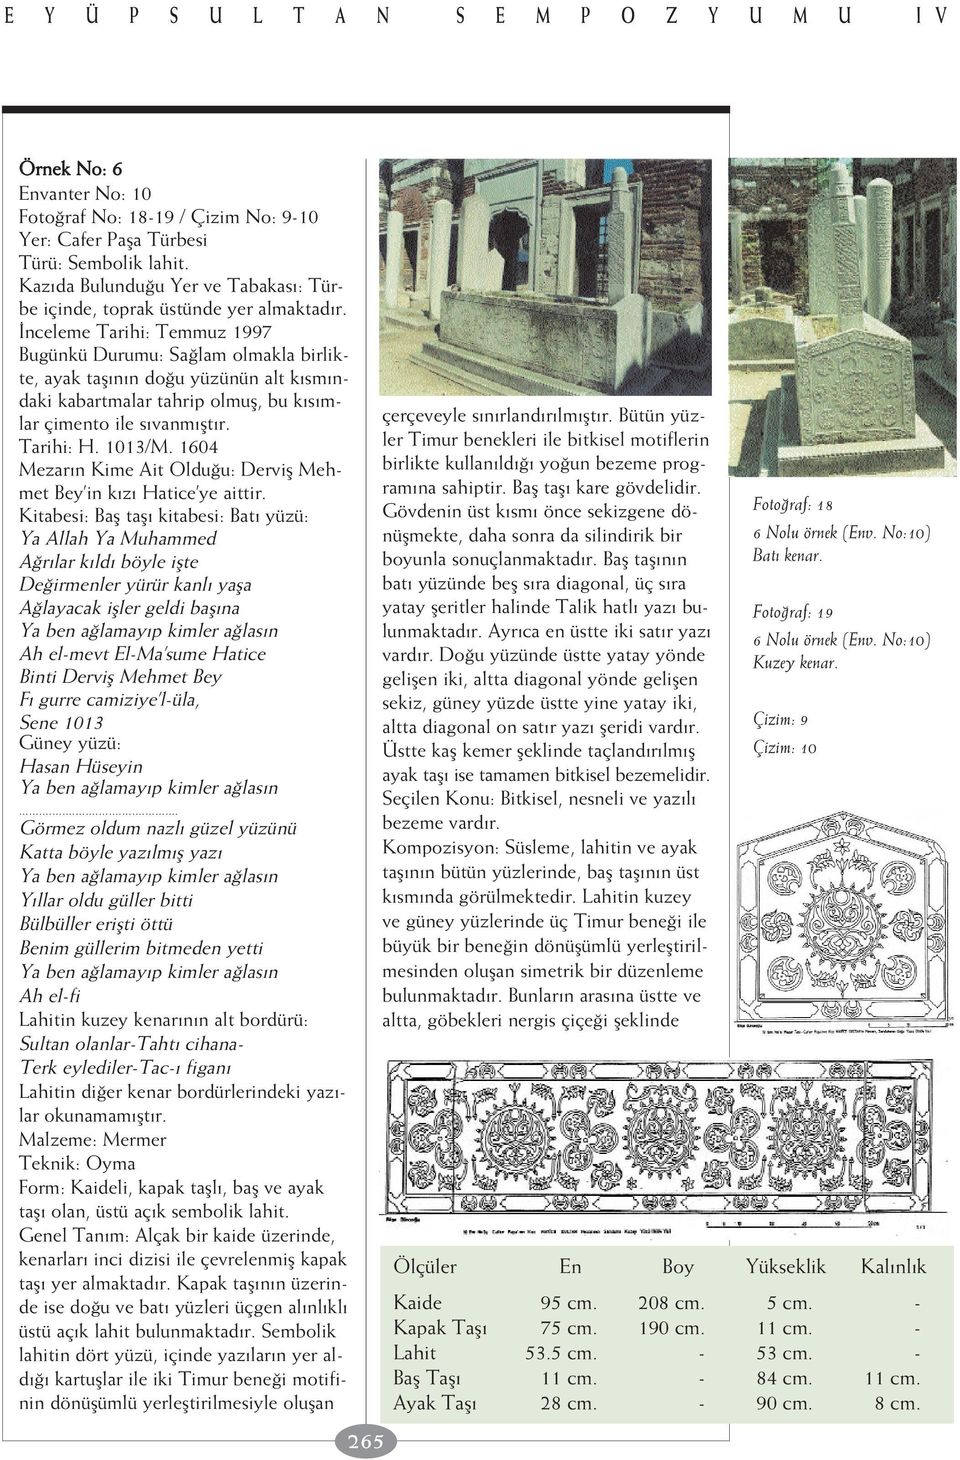 1604 Mezar n Kime Ait Oldu u: Dervifl Mehmet Bey in k z Hatice ye aittir.